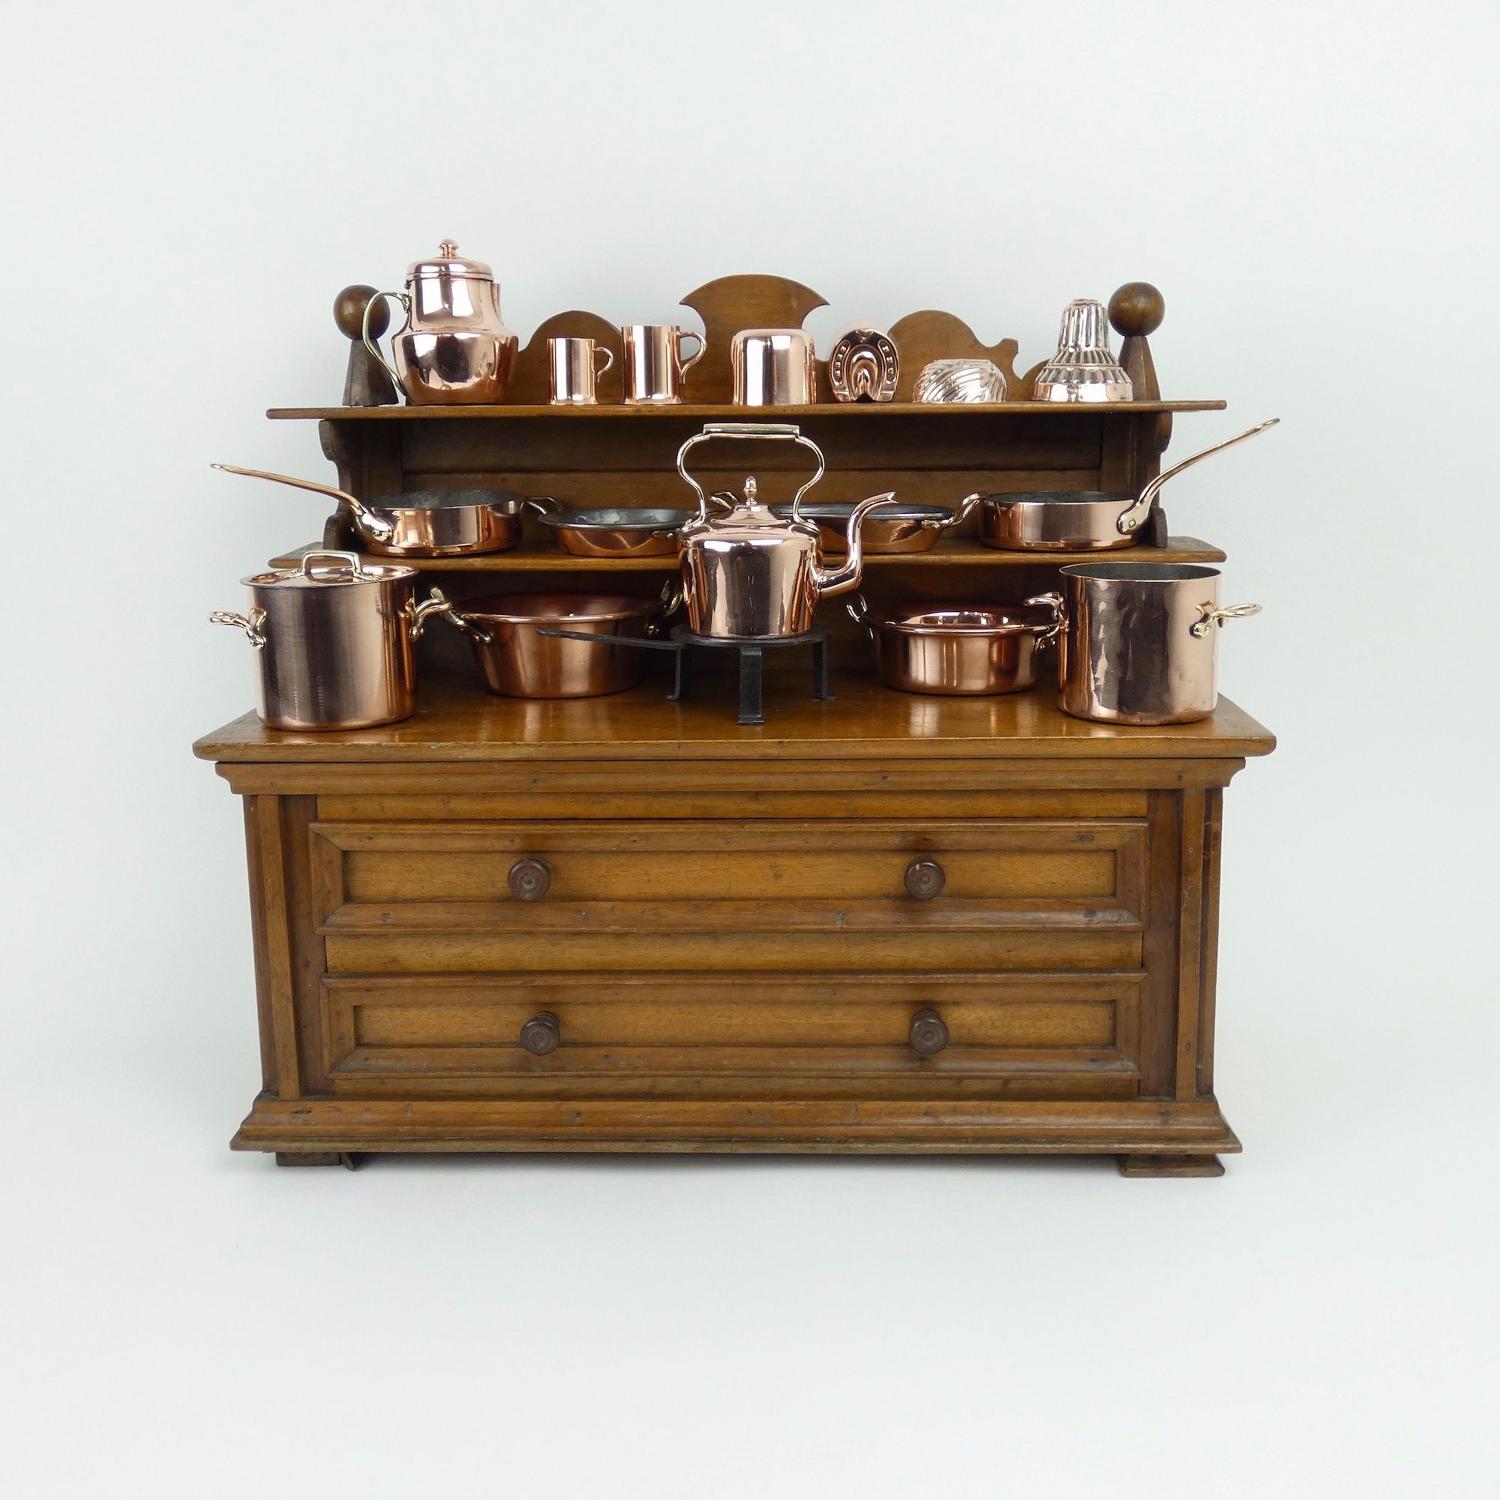 Miniature walnut dresser with copperware